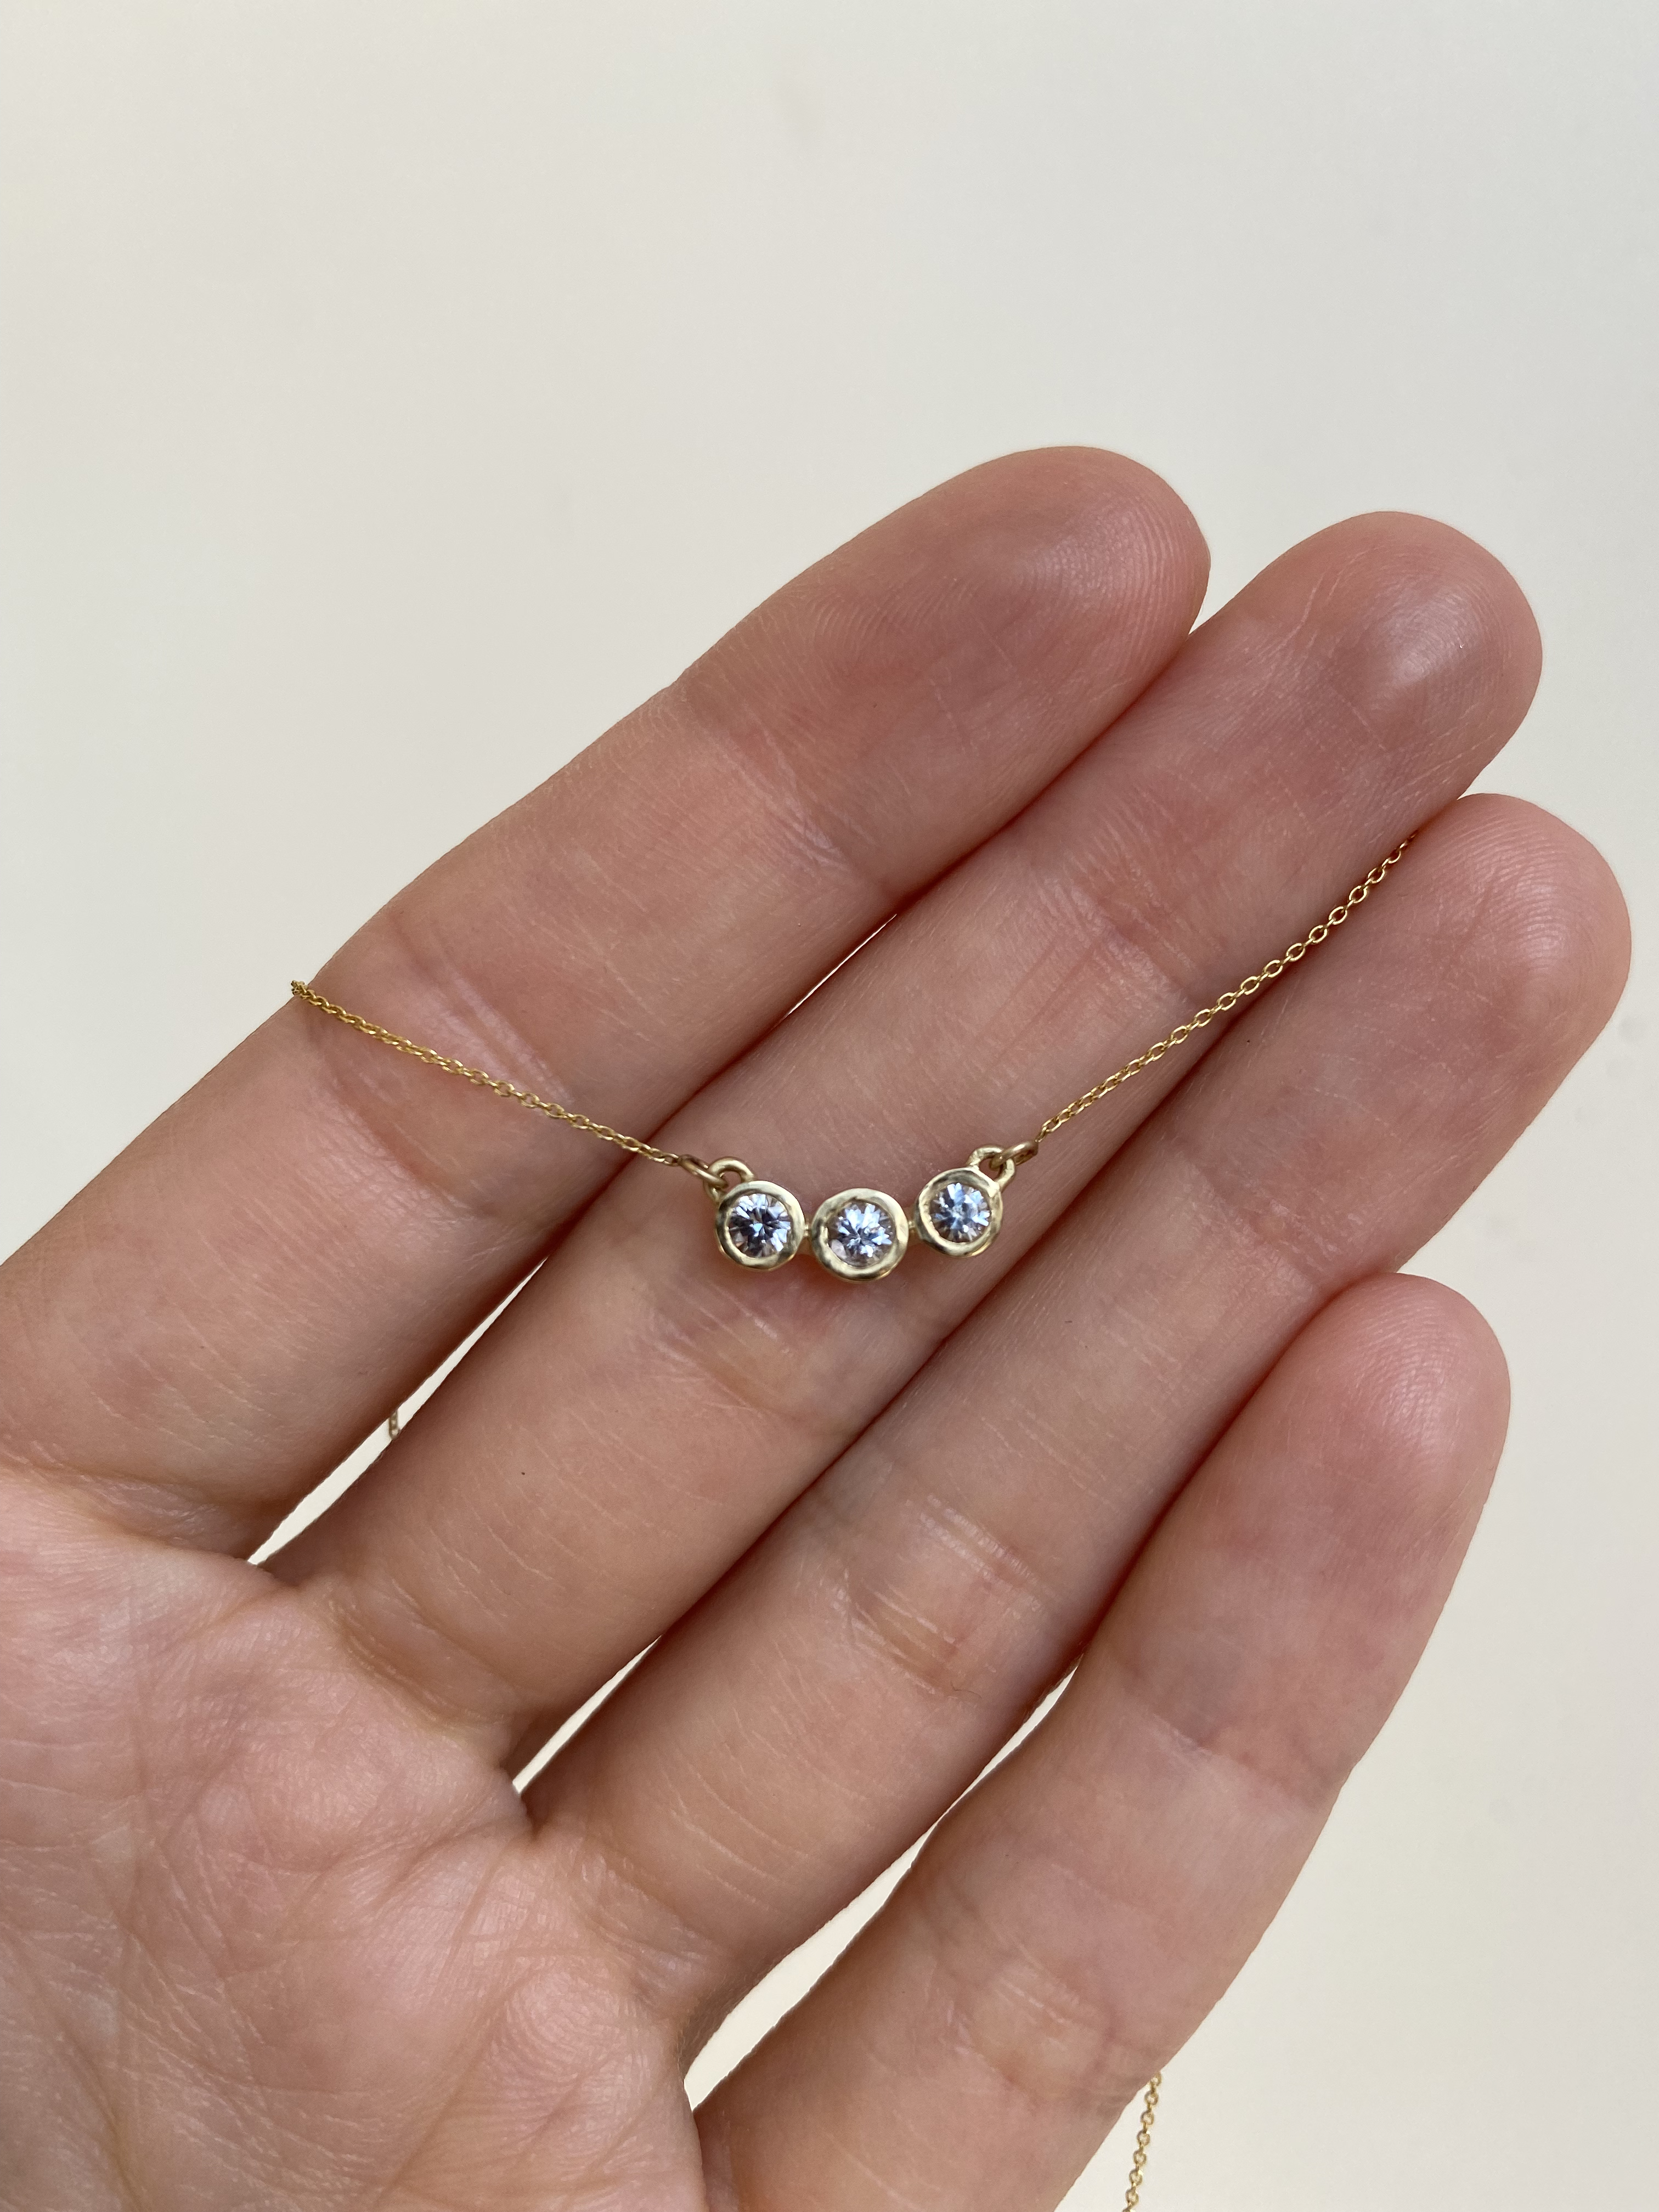 Triple Sapphire / Pendant By Tricia Kirkland in pendants Category